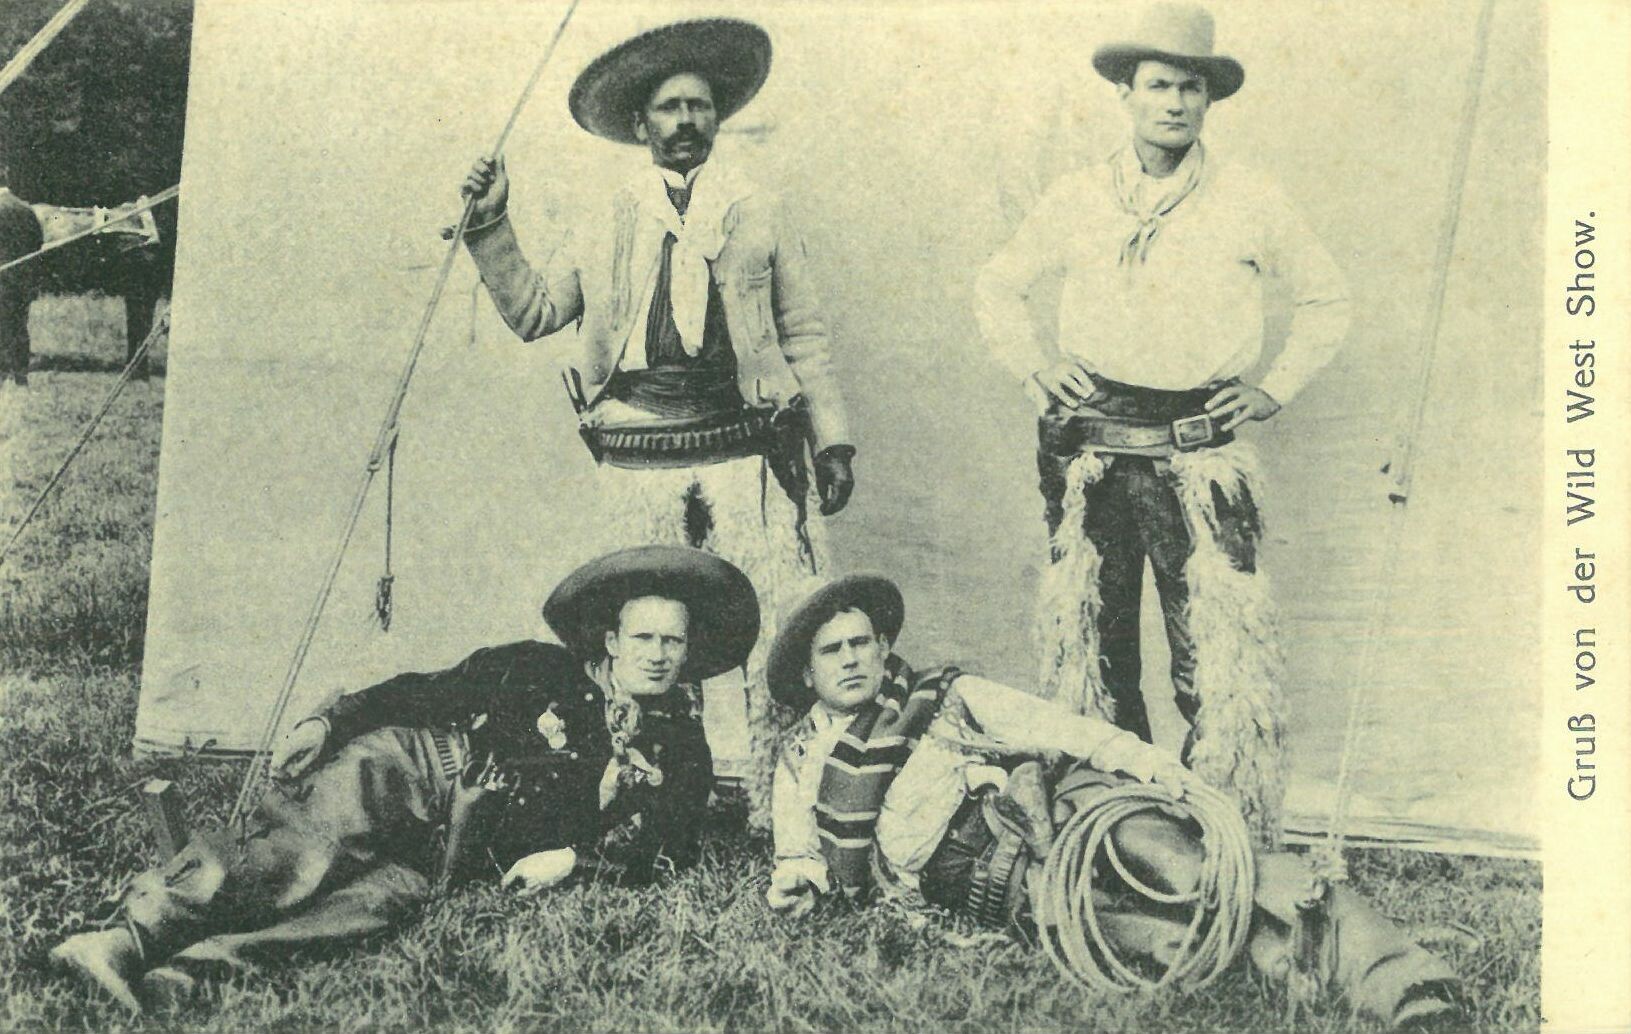 Wild west Show der Deer Family; Gruppenbild mit 4 Männern (Karl-May-Museum gGmbH RR-R)